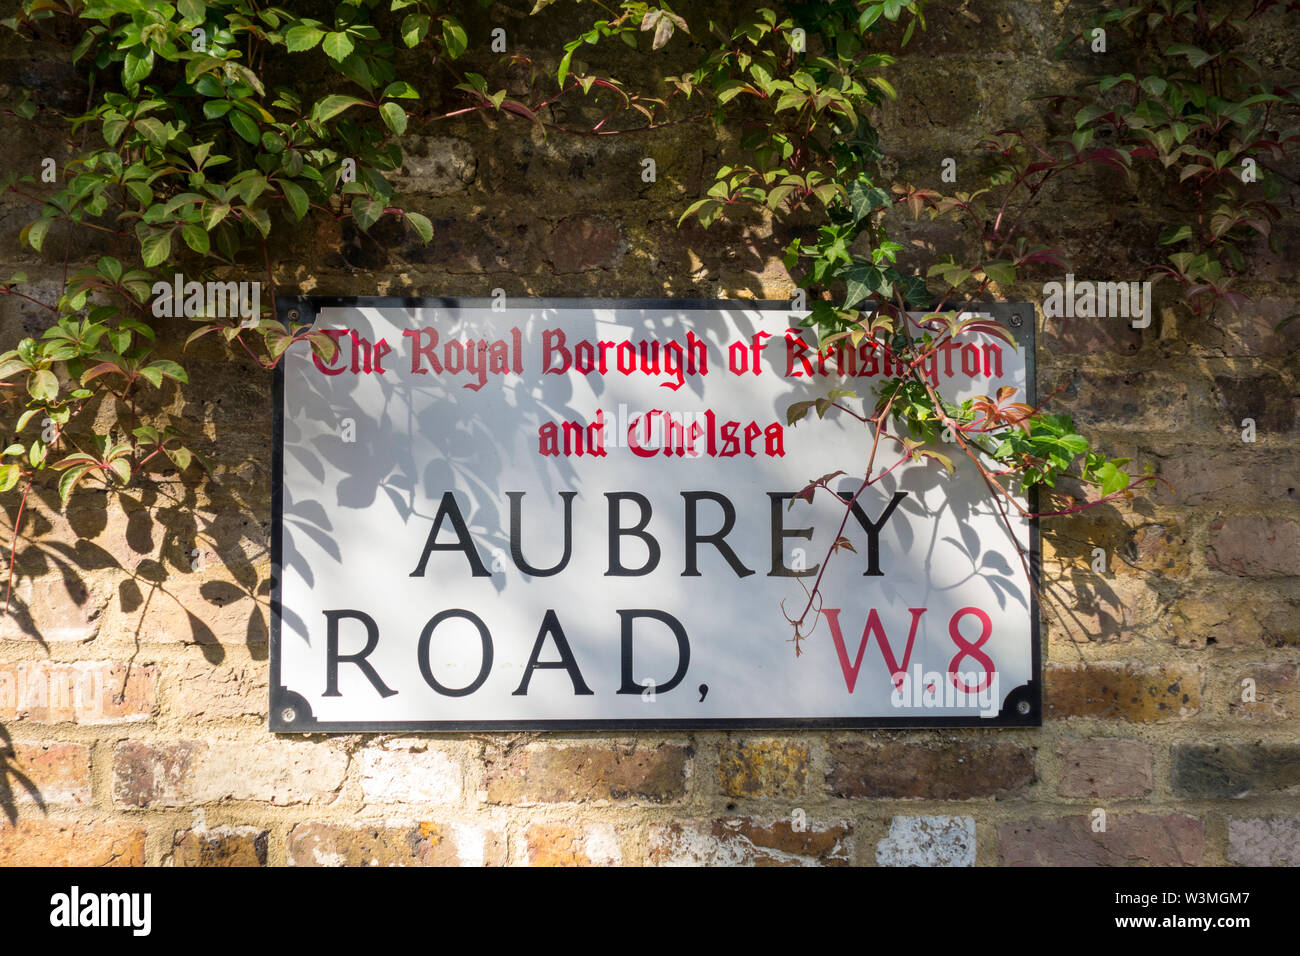 Aubrey Road sign, Royal Borough of Kensington and Chelsea, London, UK Stock Photo